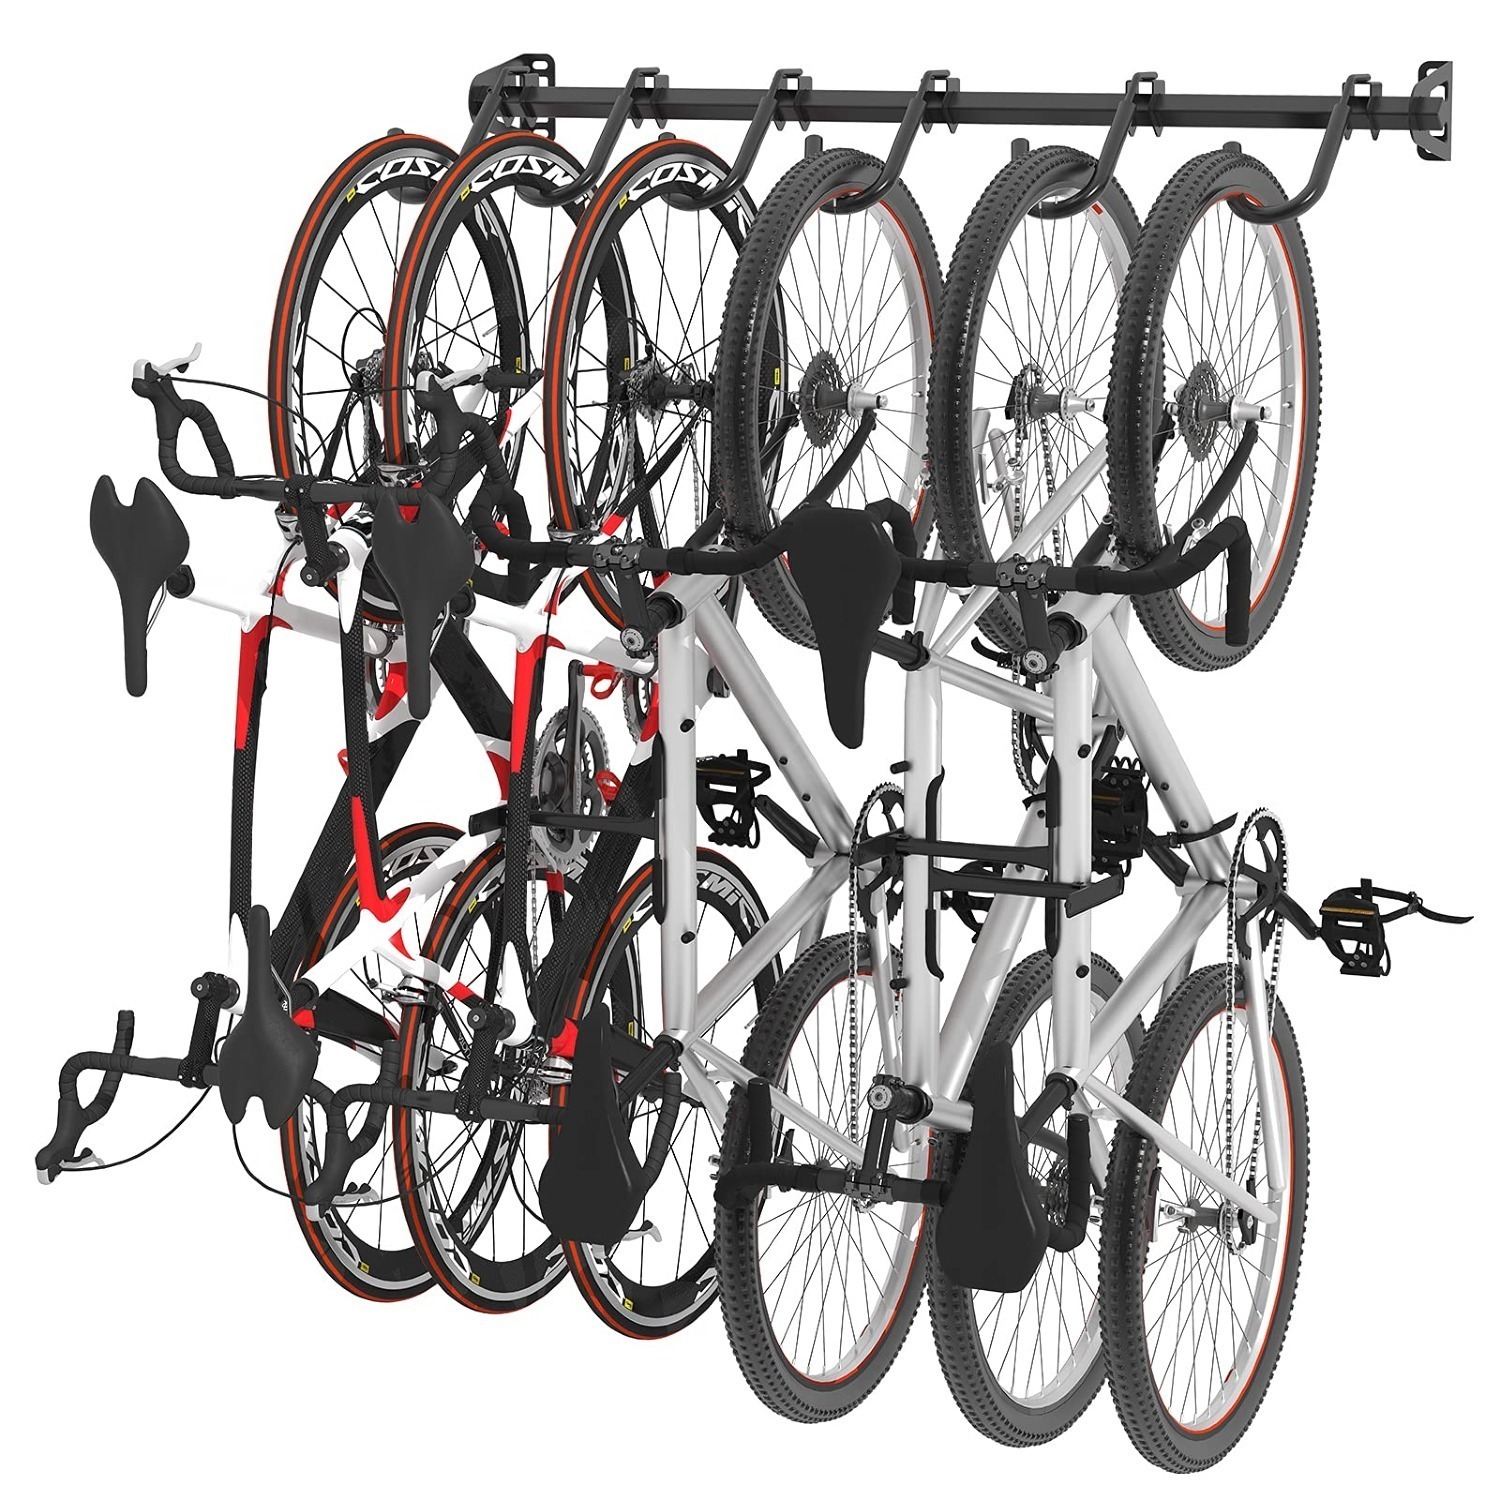 Fleximounts 4-Bike Heavy-Duty Storage Rack (Up to 200lbs) $25 + Free Shipping